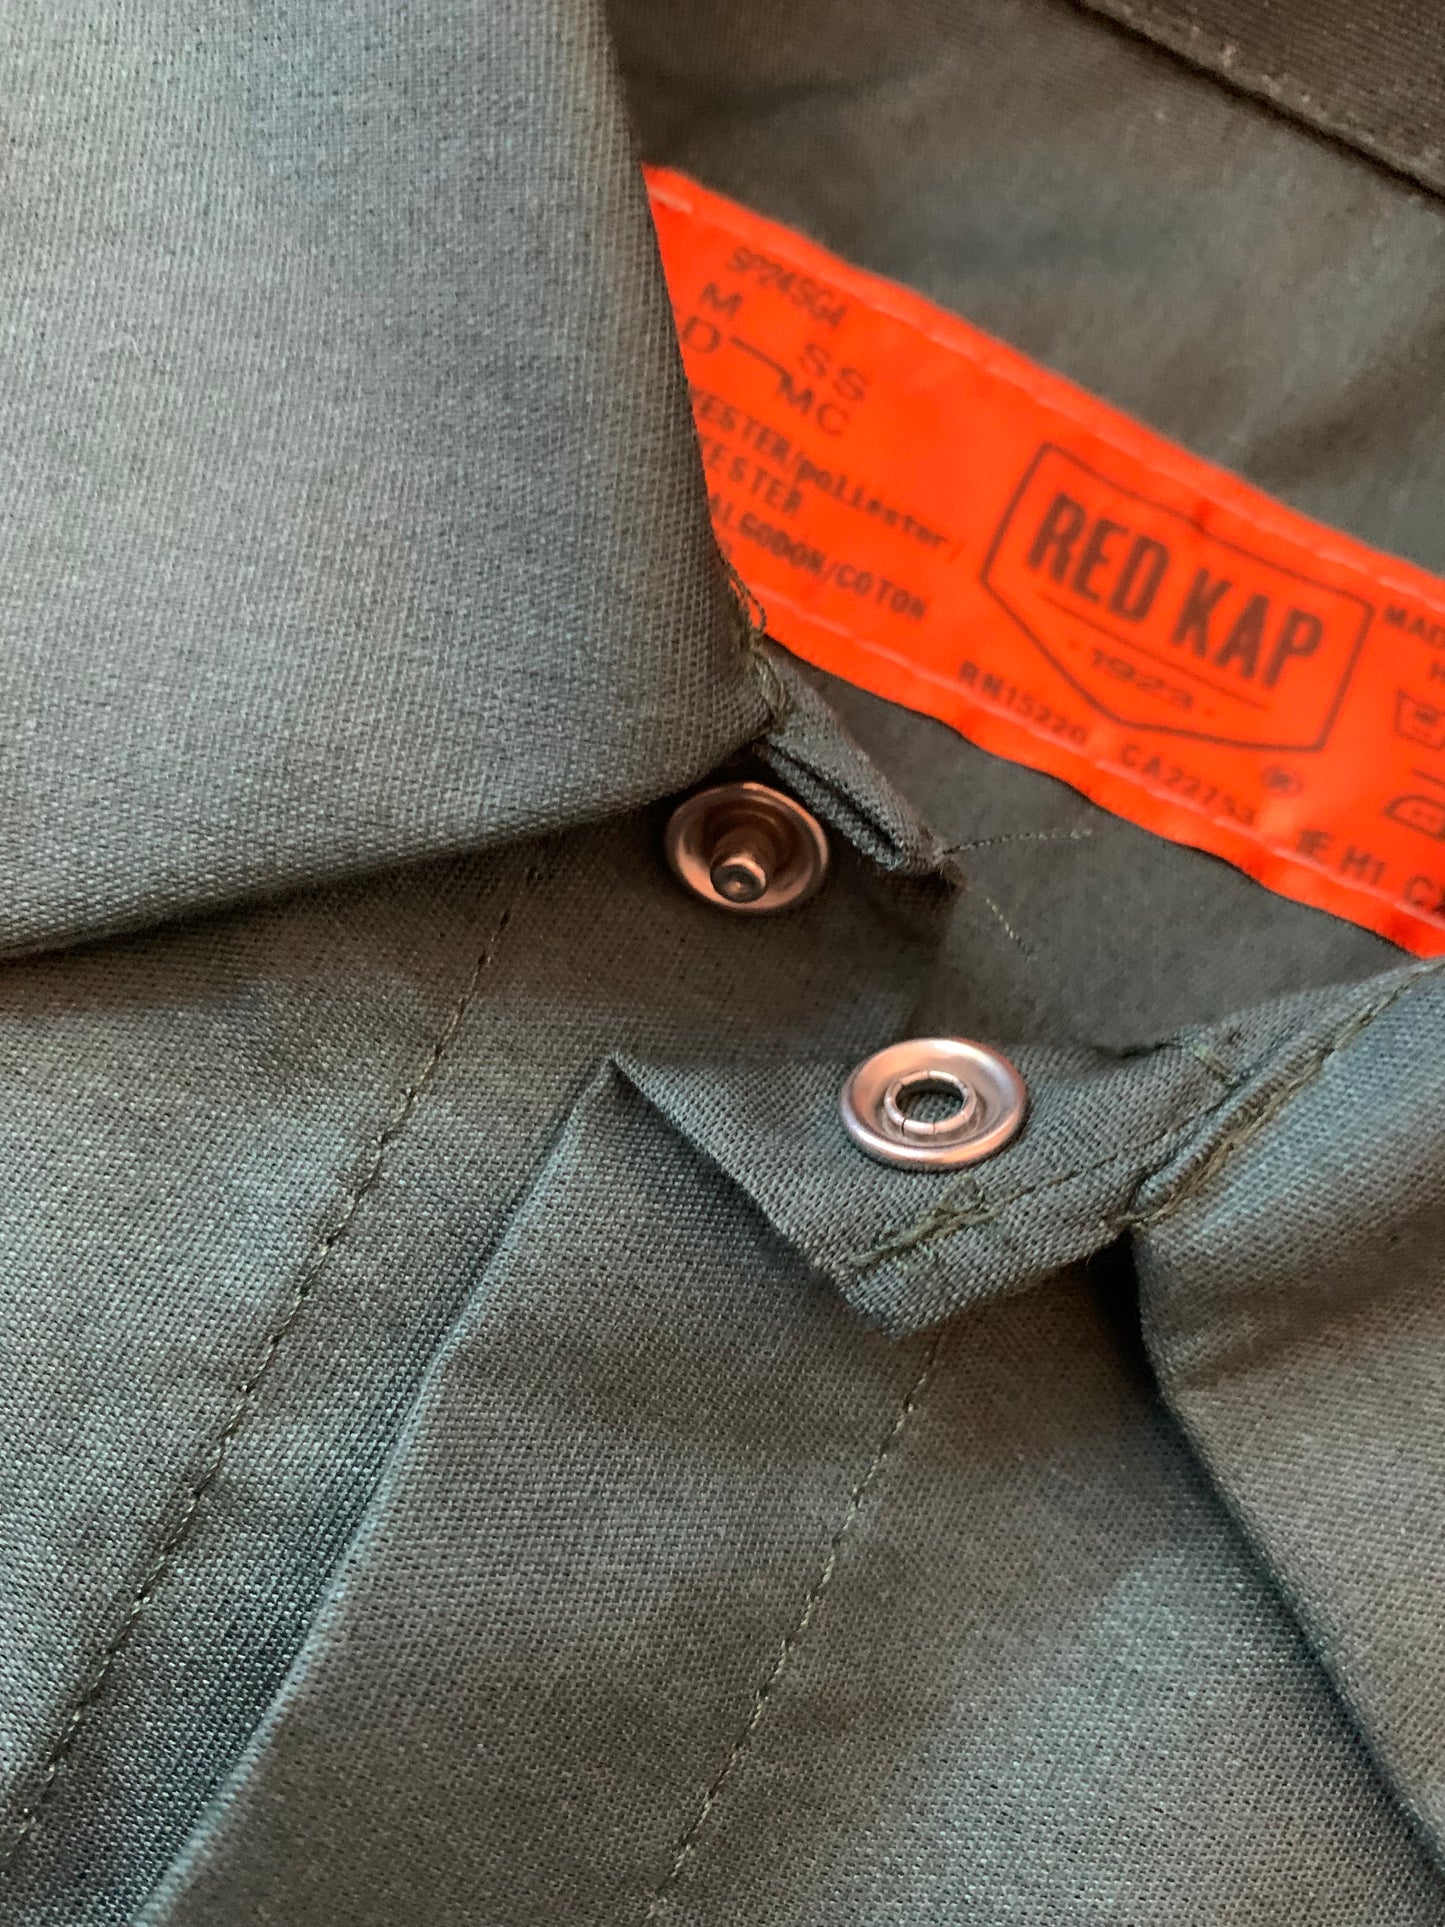 Dark Teal Red Kap Utility Short Sleeve Button Down Shirt